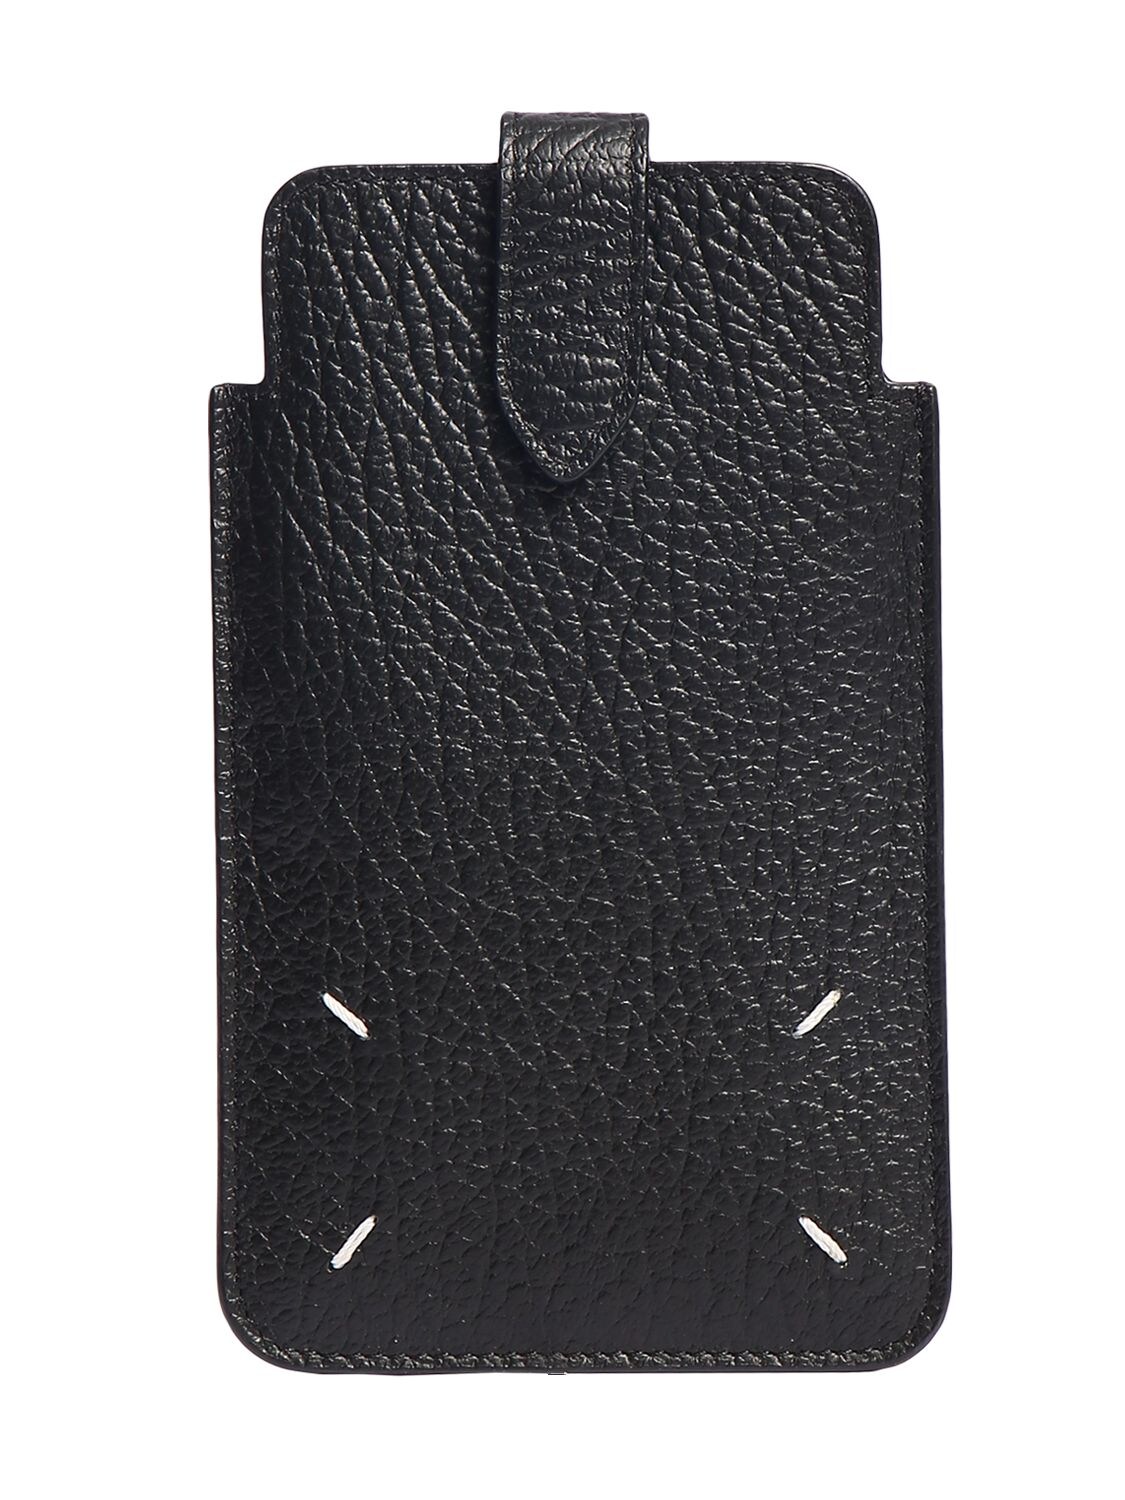 MAISON MARGIELA 粒面压纹皮革手机包,73IM79005-VDGWMTM1